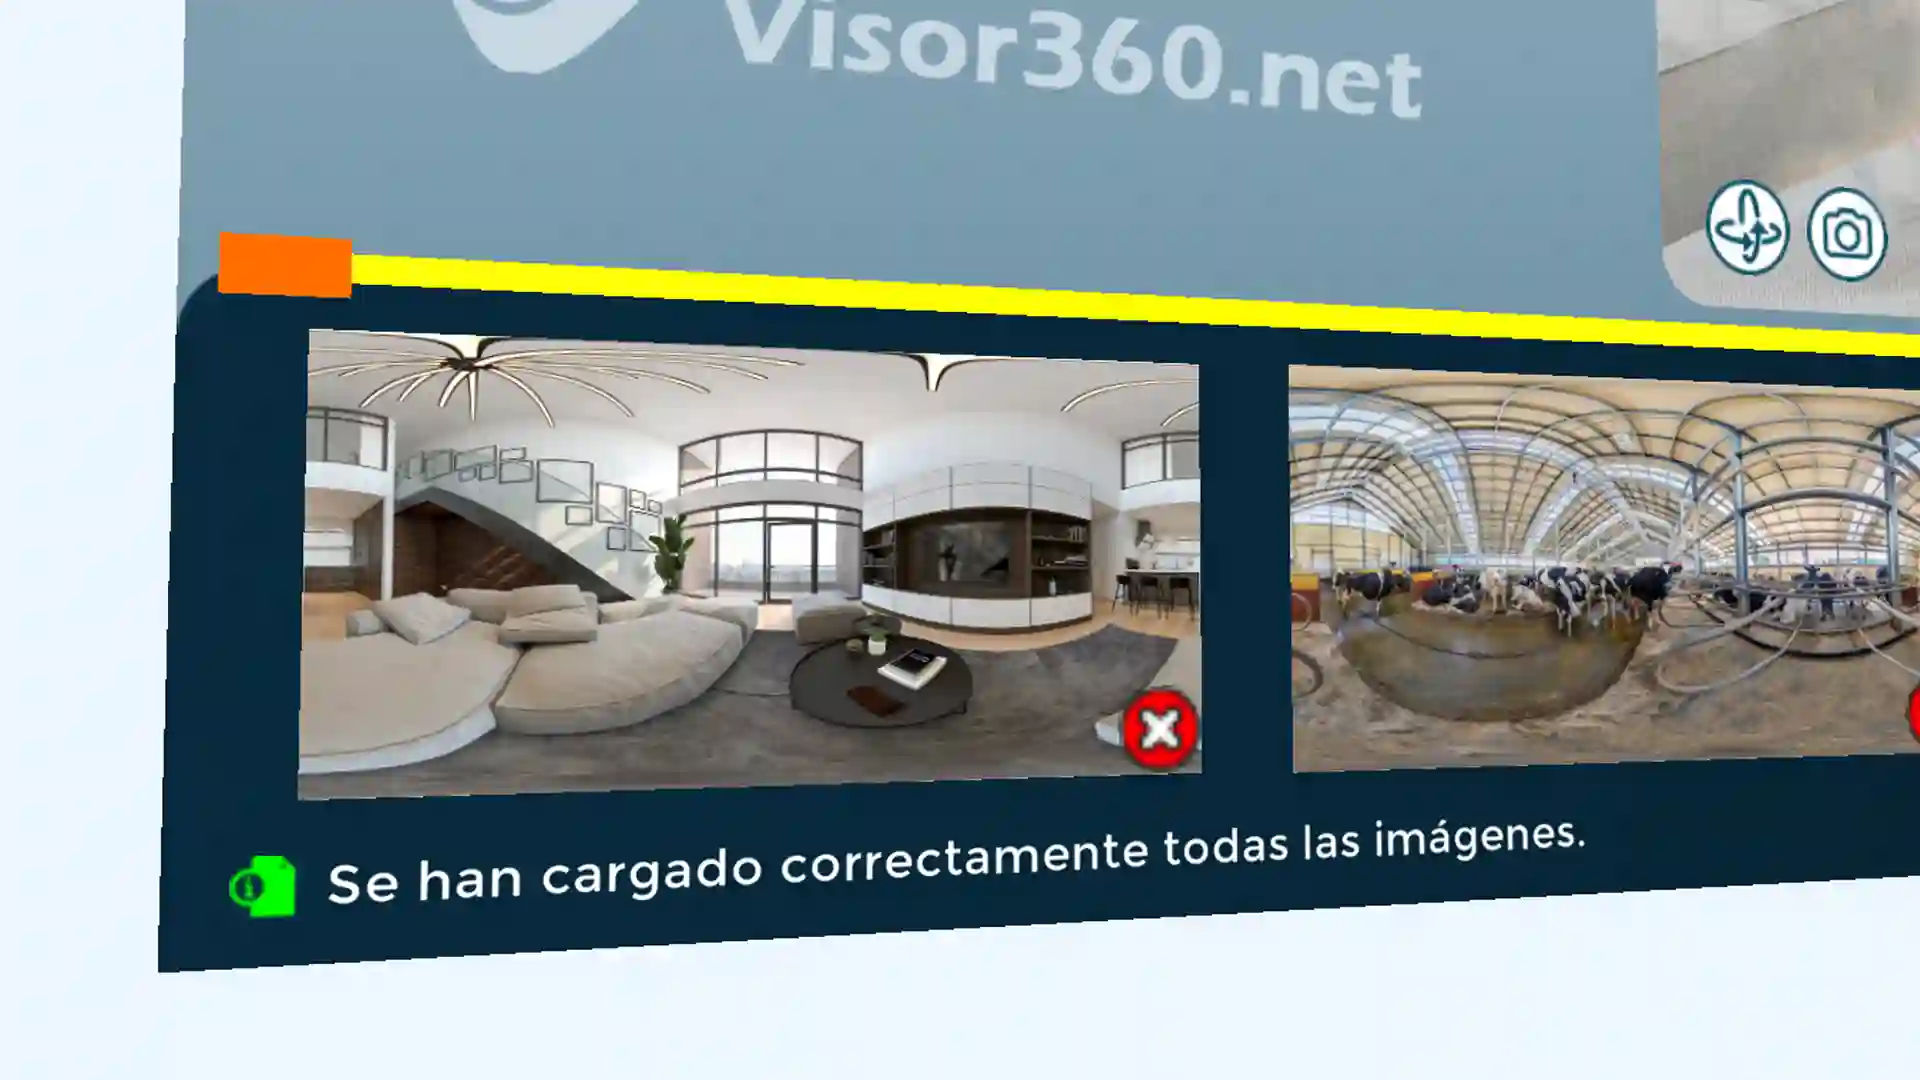 Consola de información - Comunicación entre Visor360 y tú